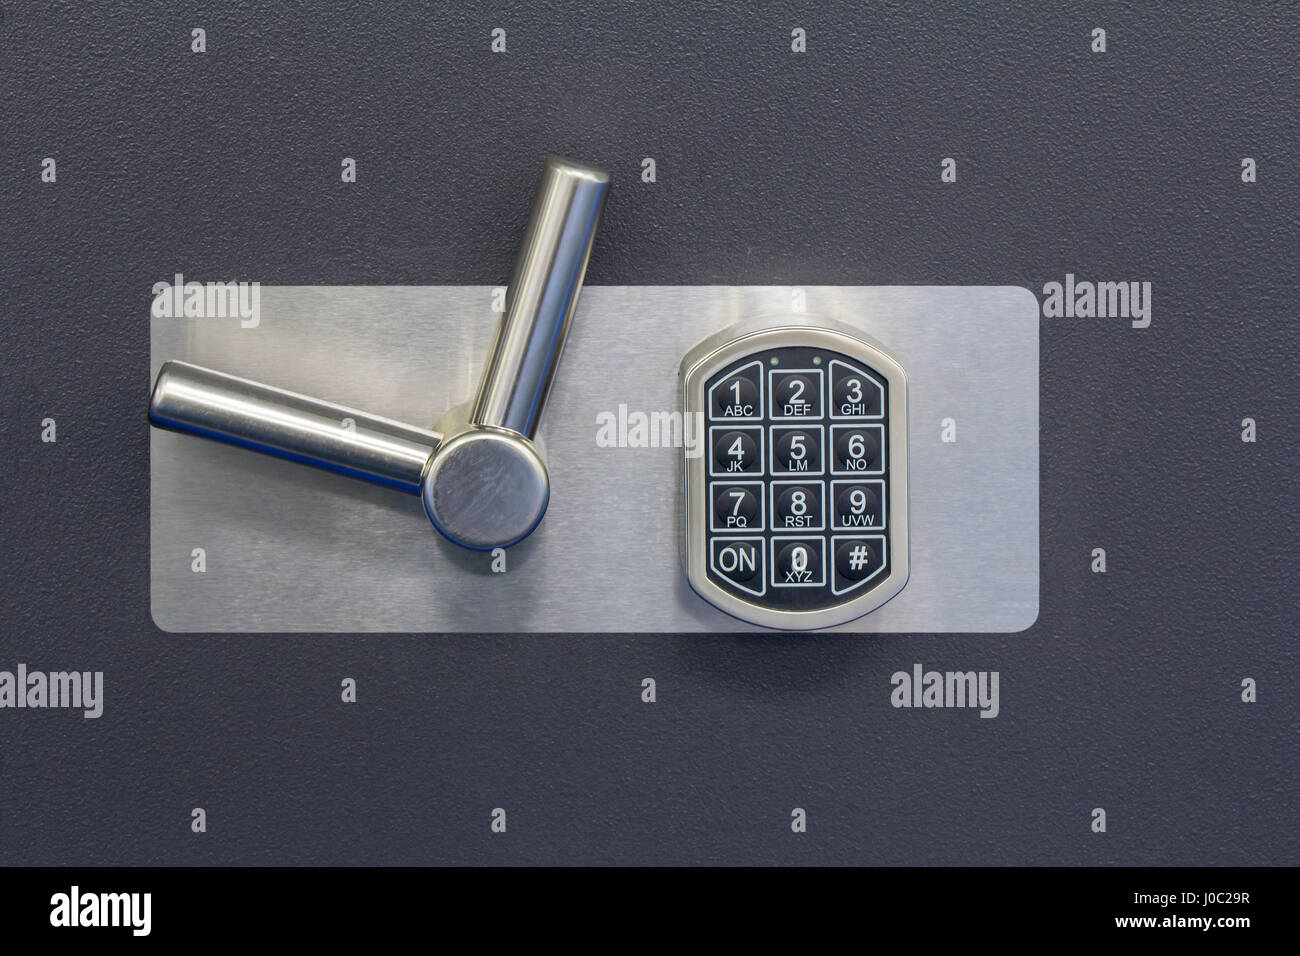 Digital safe lock code on a Safety box bank Stock Photo